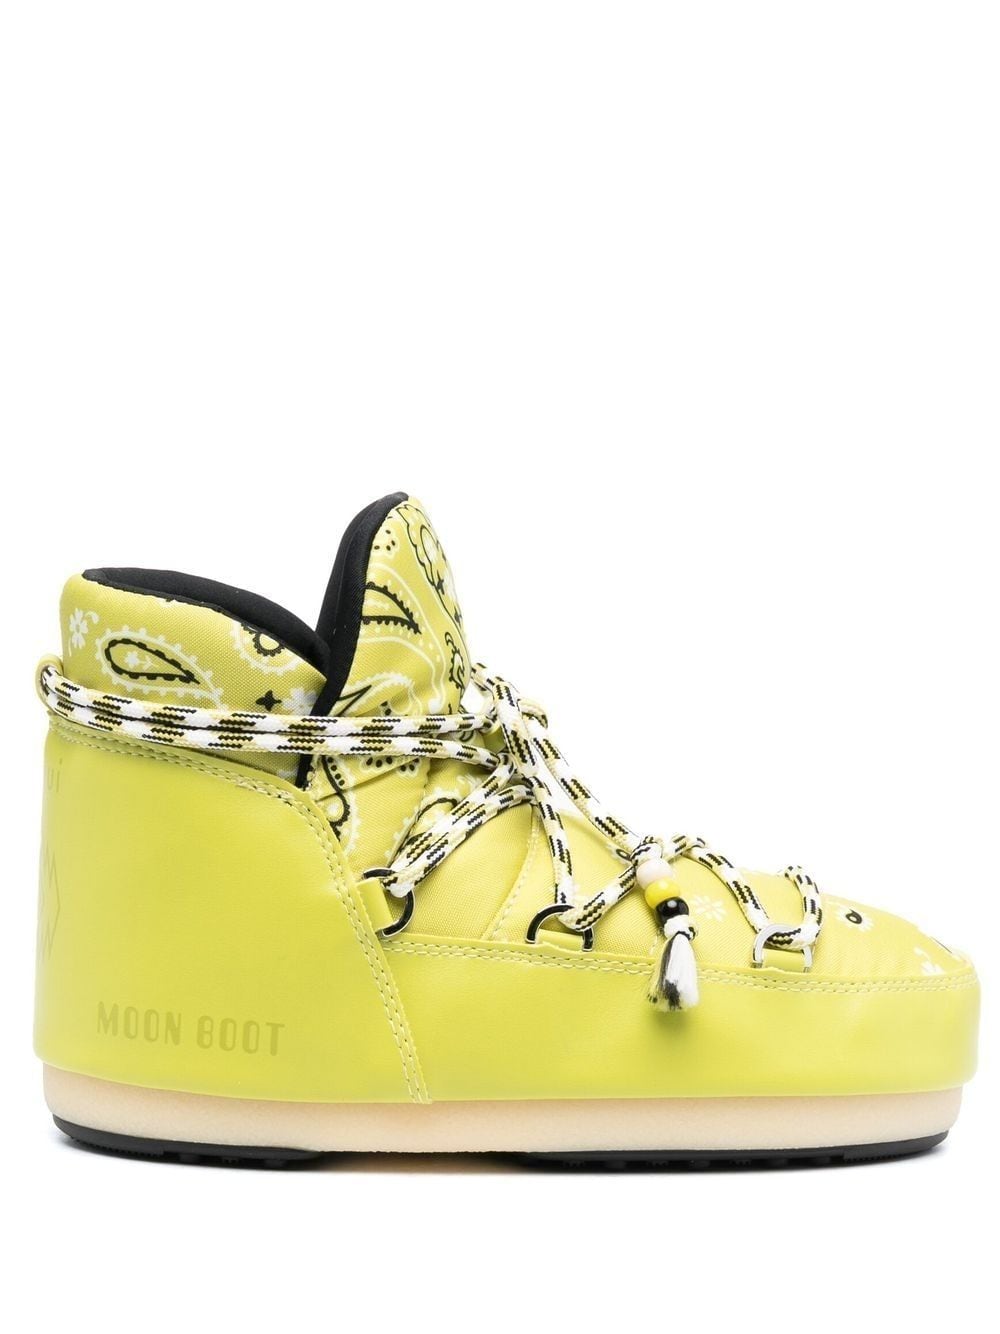 Alanui x Moon boot bandana-print boots - Yellow von Alanui x Moon boot